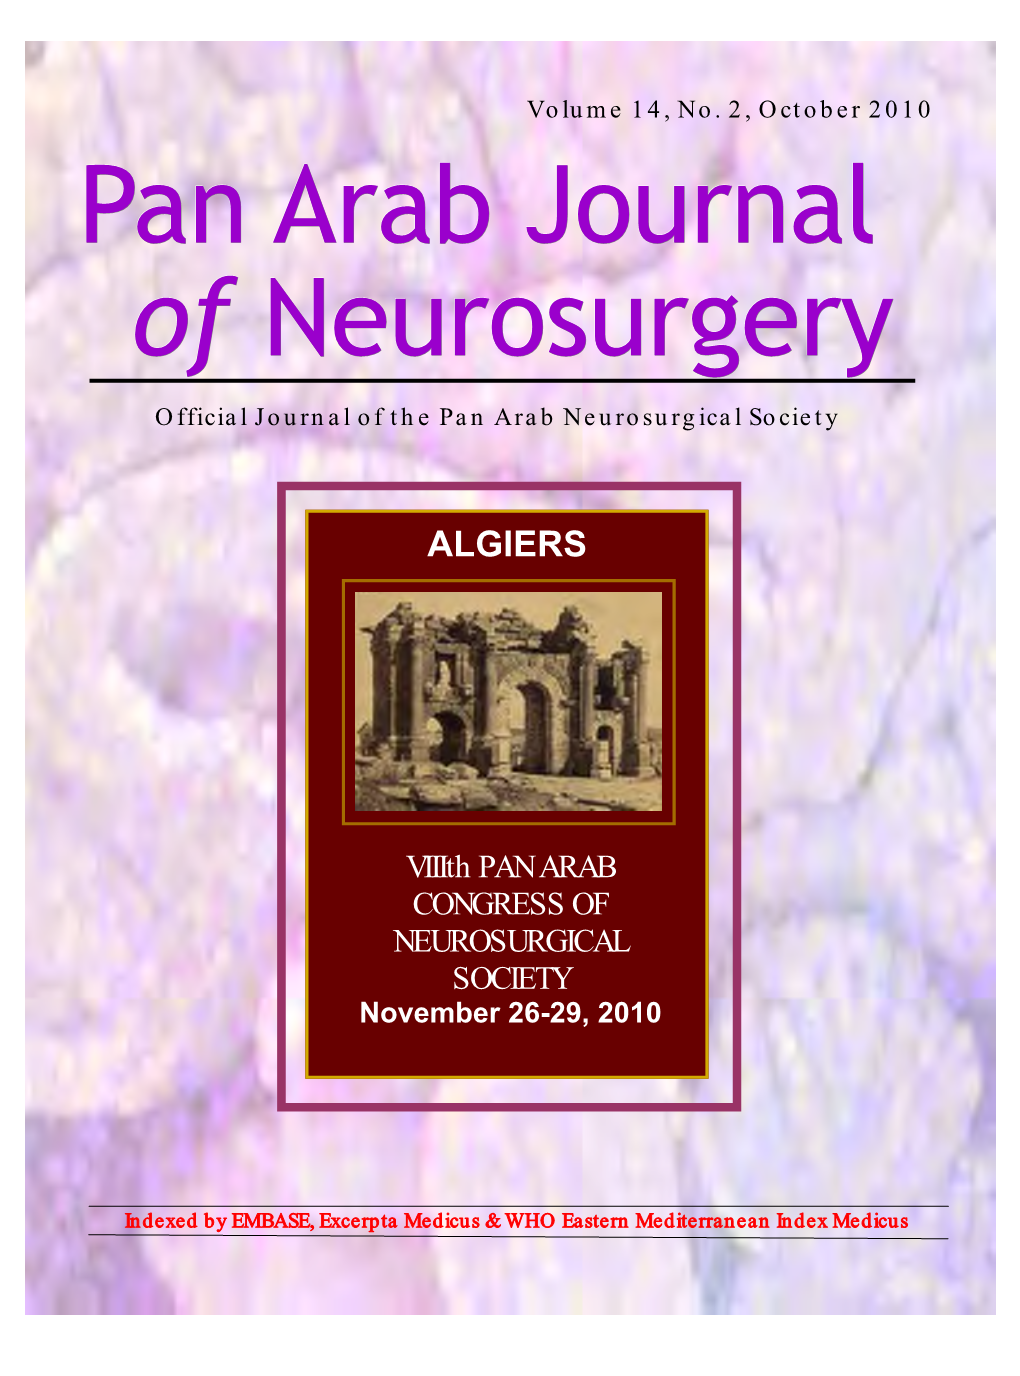 Pan Arab Journal of Neurosurgery, October 2010